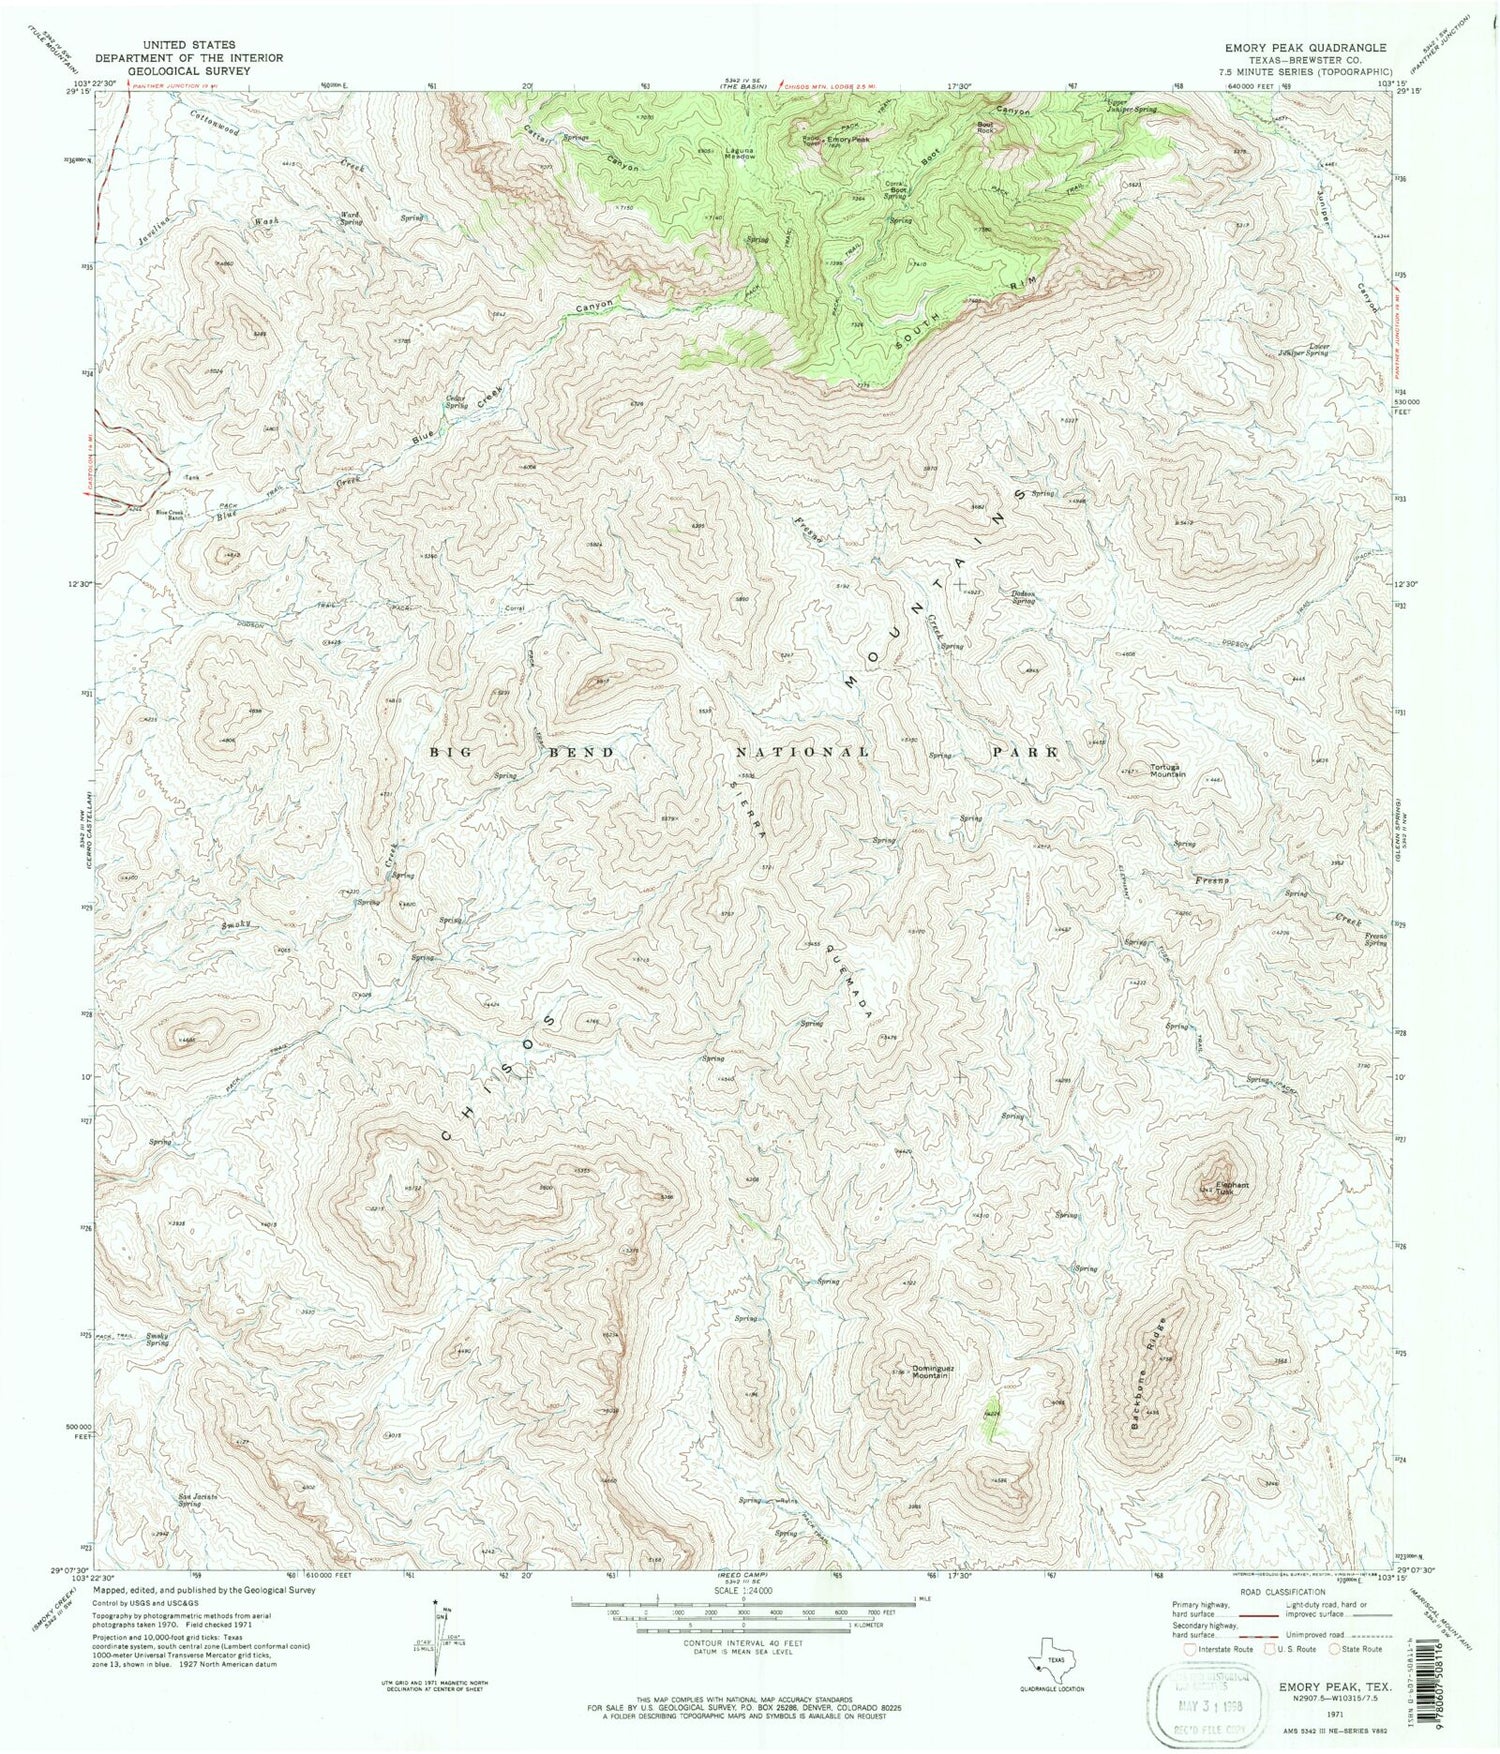 USGS Classic Emory Peak Texas 7.5'x7.5' Topo Map Image